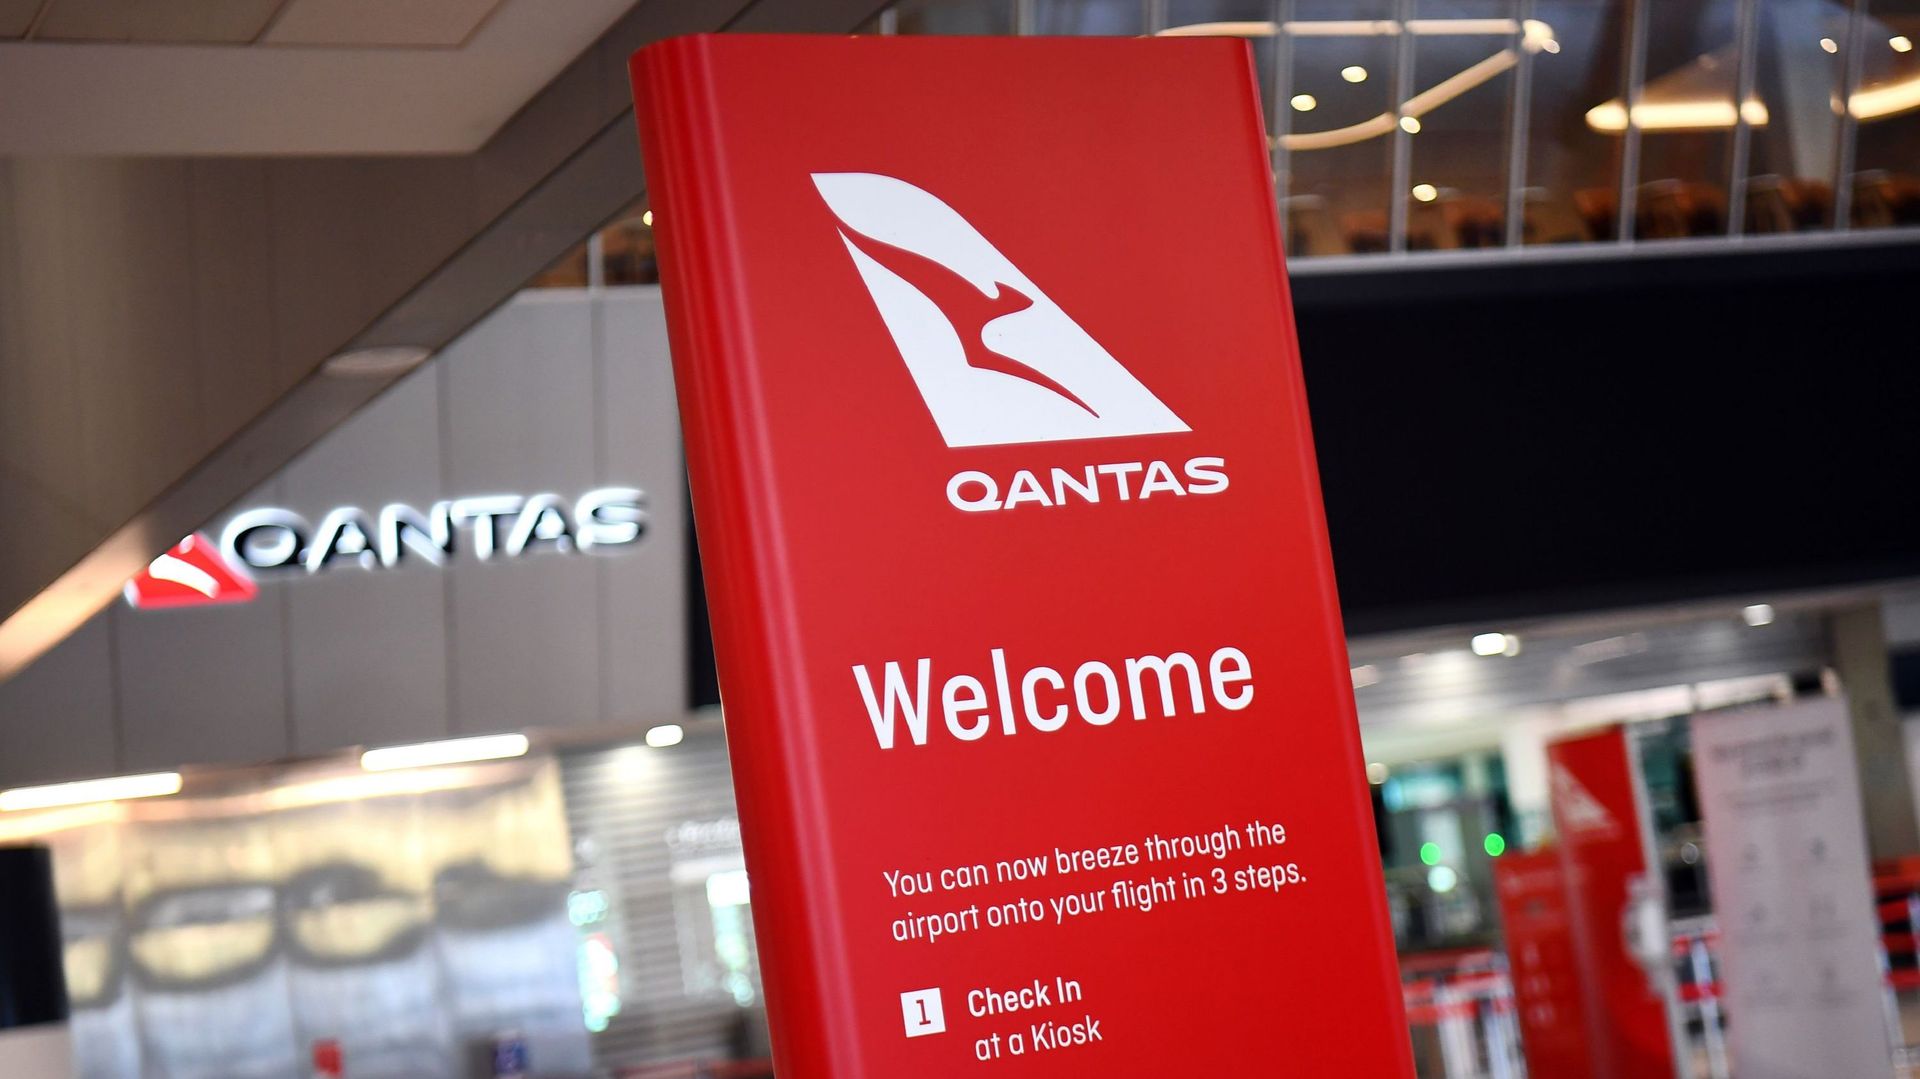 Coronavirus : la vaccination sera obligatoire sur les vols internationaux selon le patron de Qantas